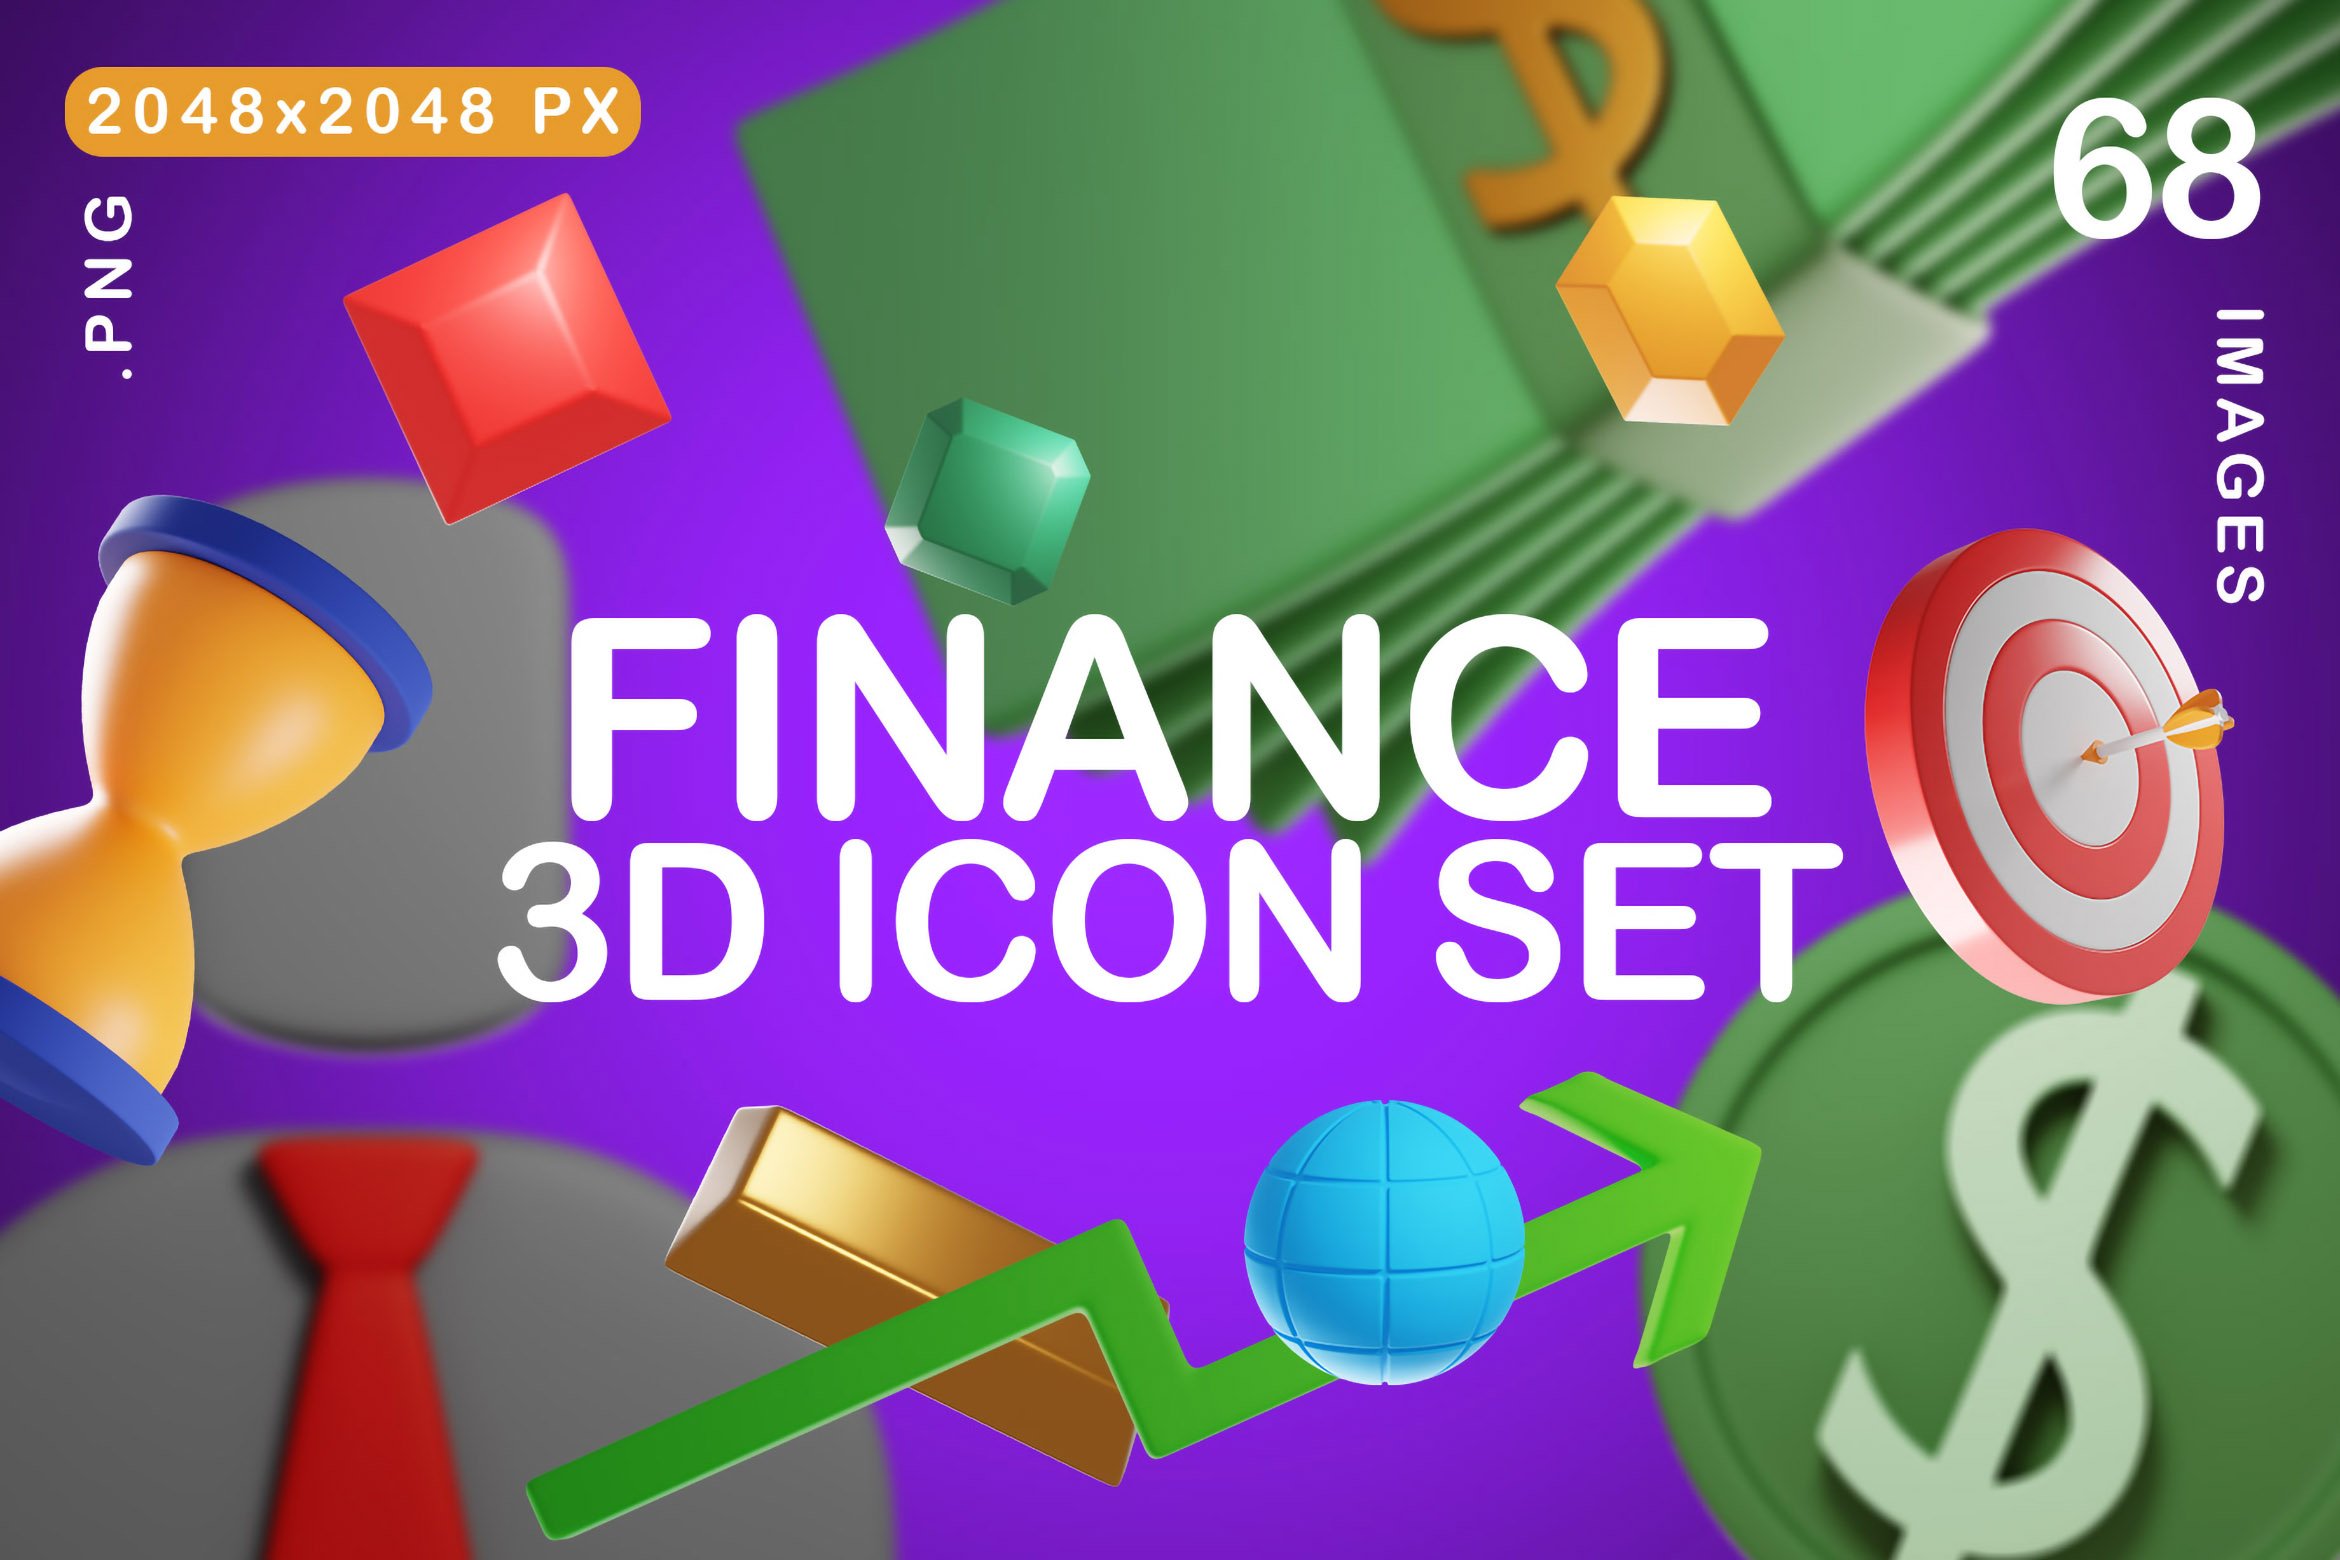 Finance 3D Icon Set.jpg